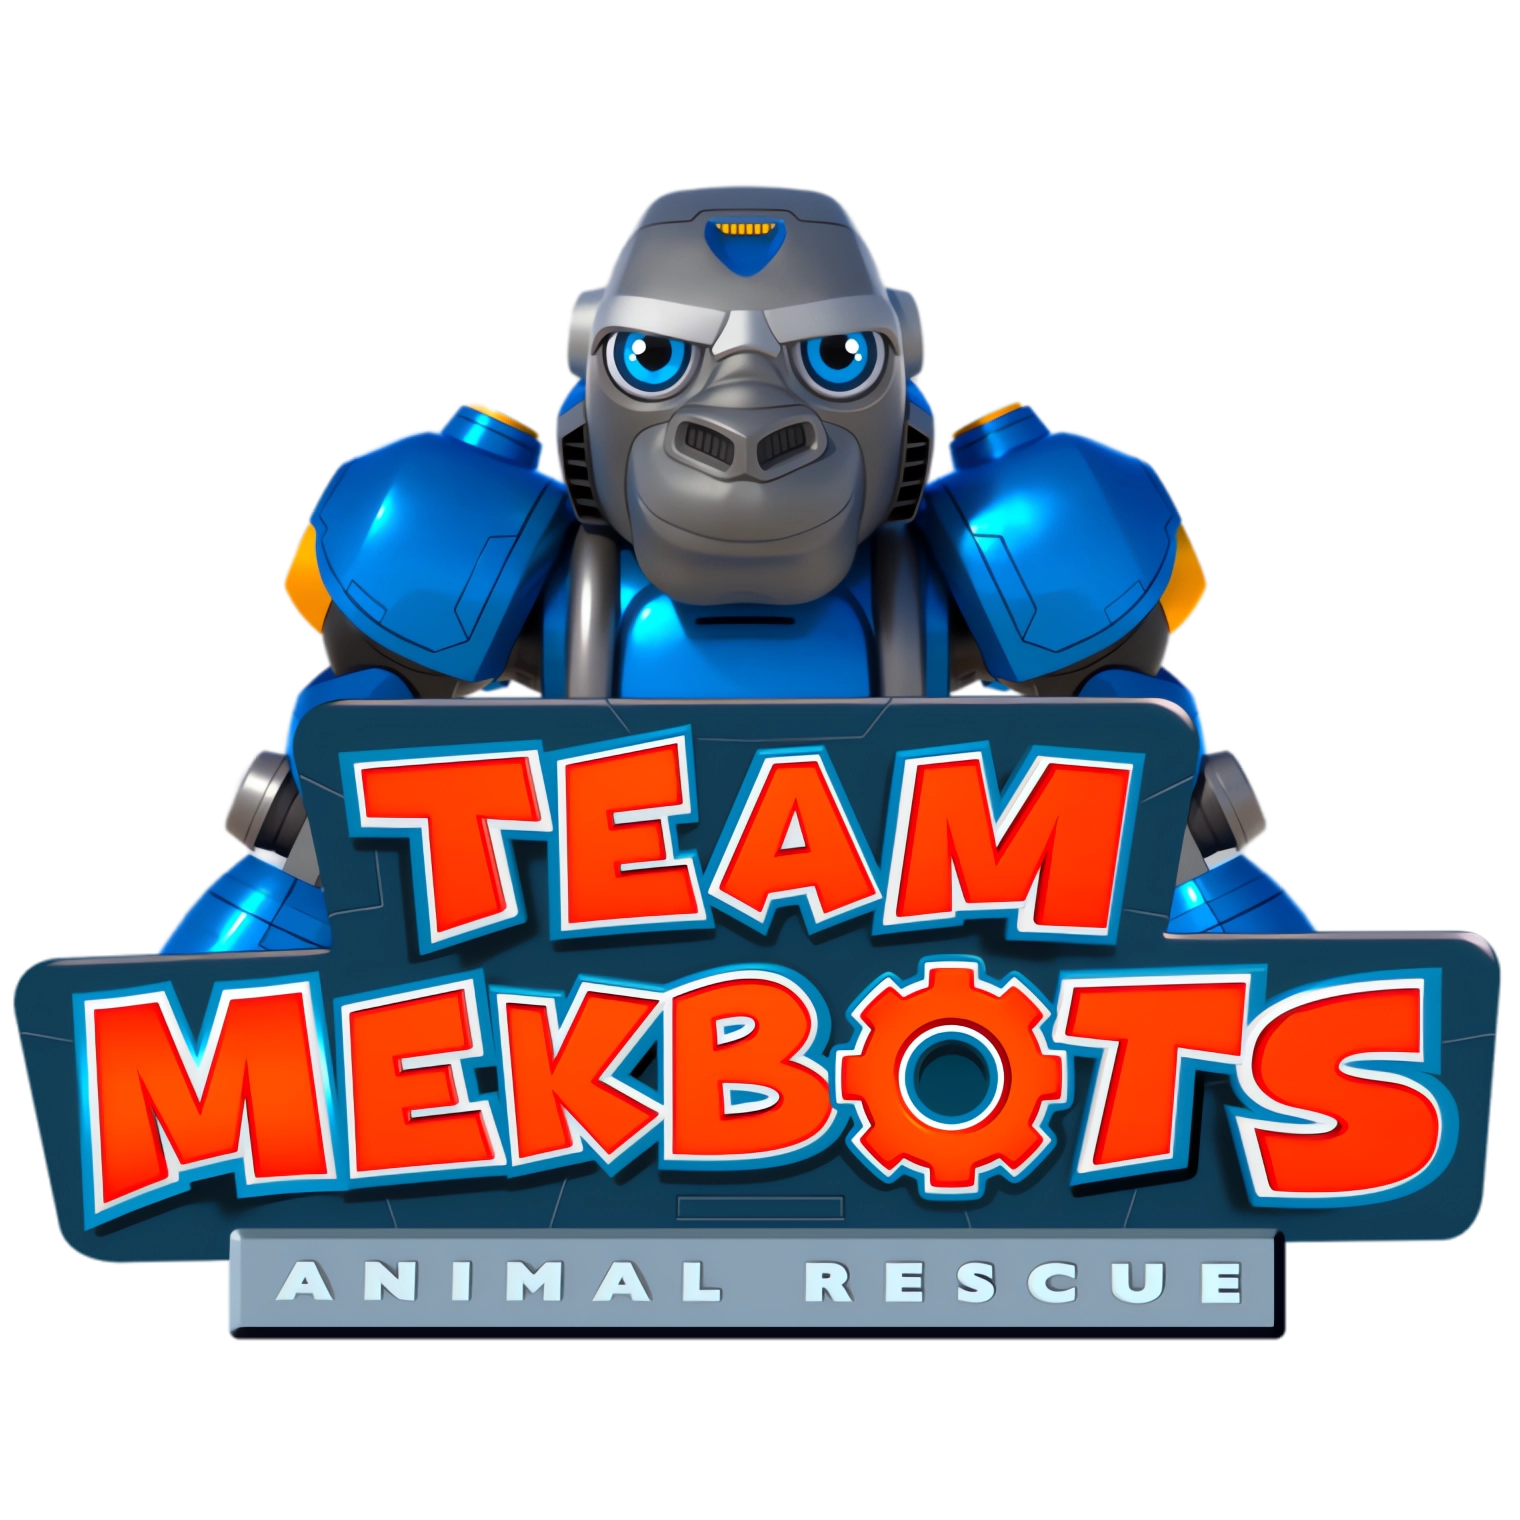 Team Mekbots Animal Rescue – La serie animata